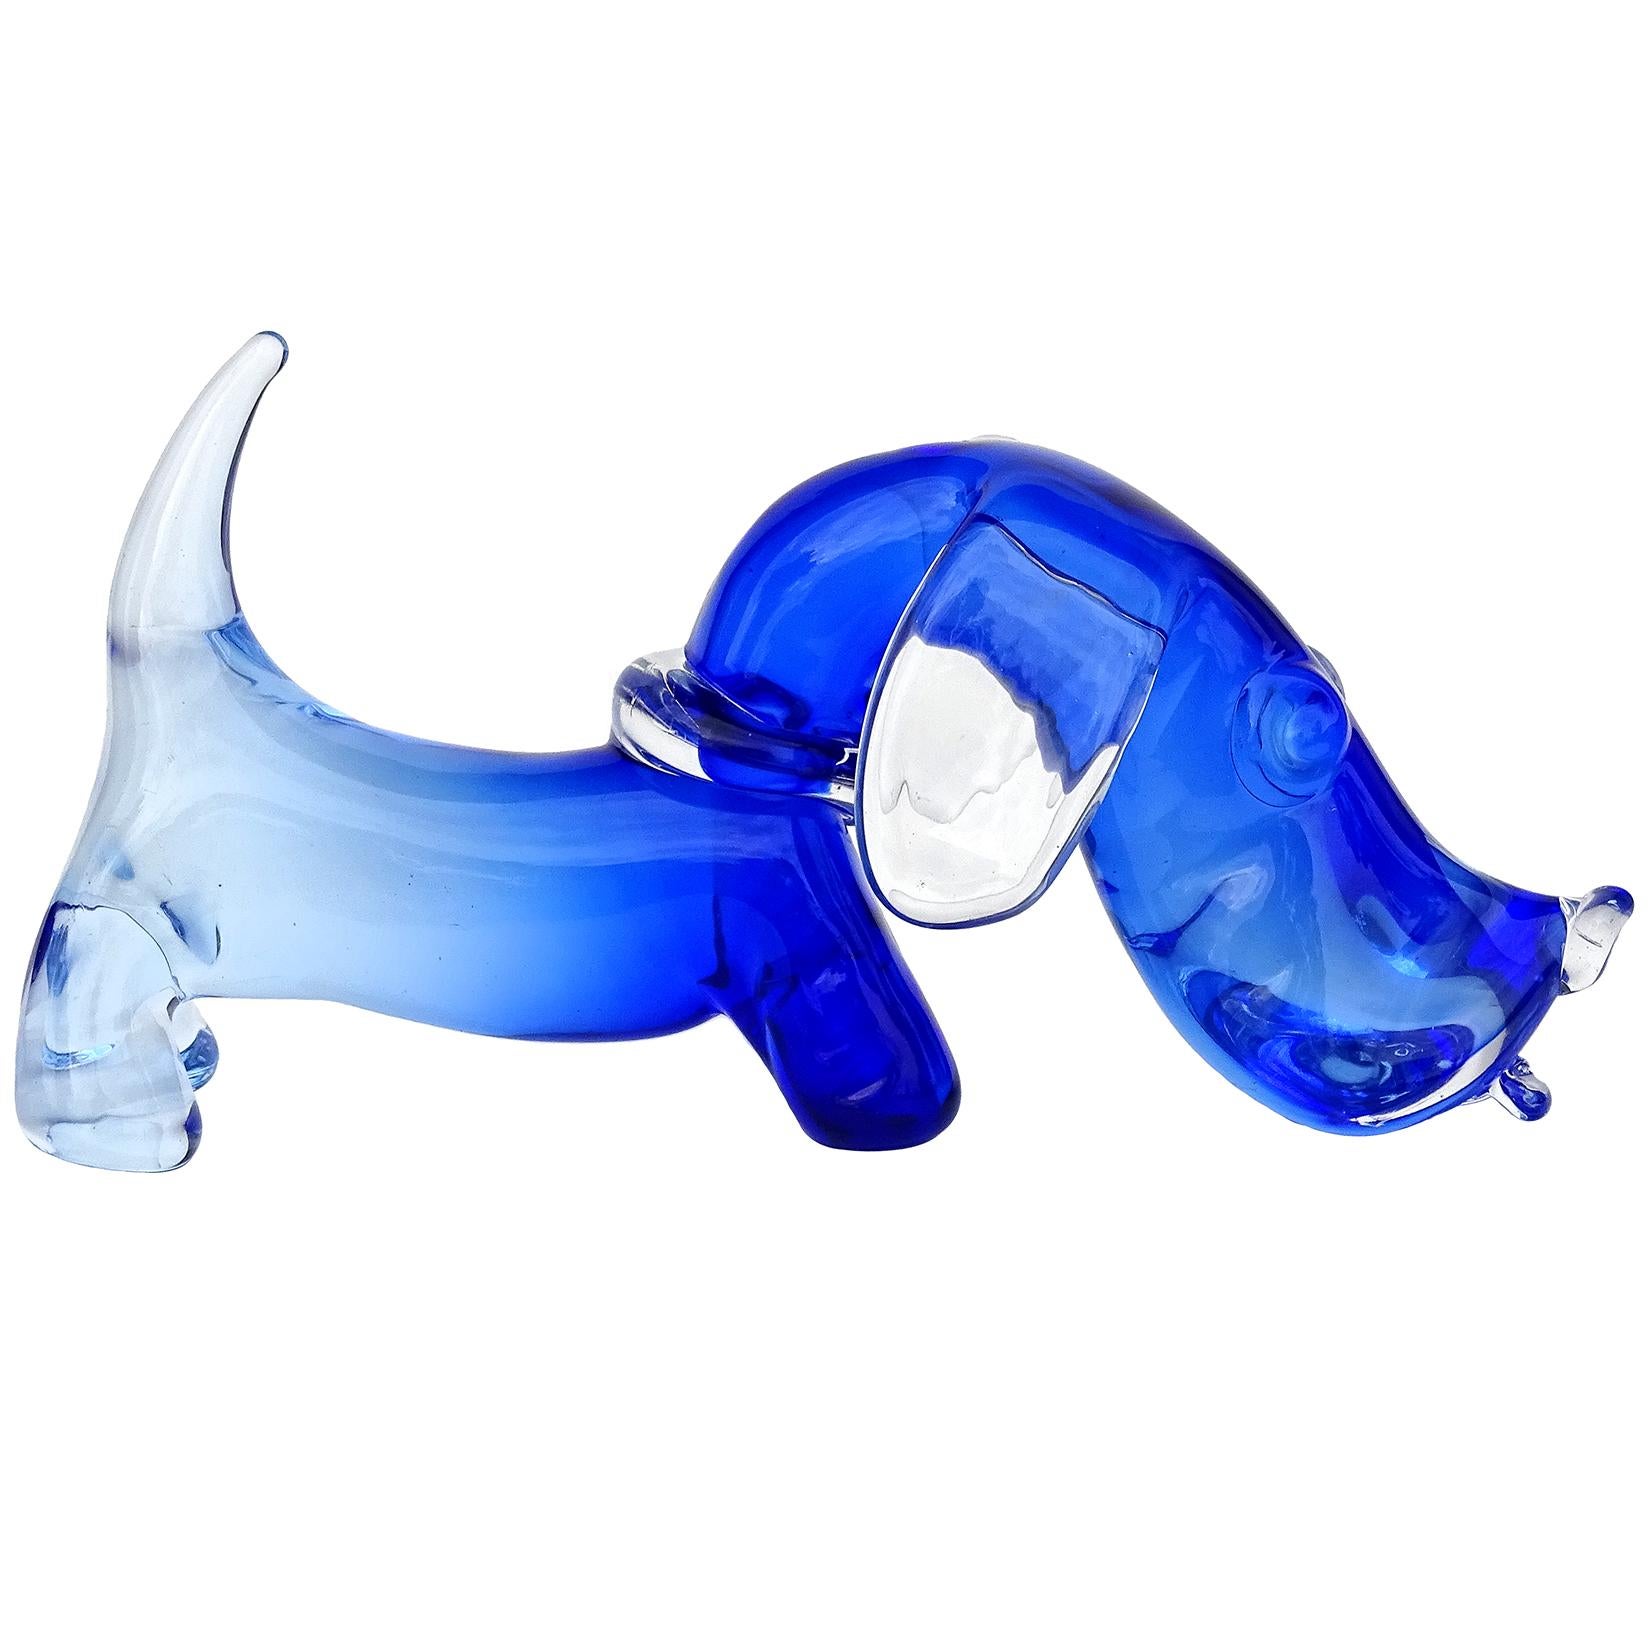 Seguso Murano Sommerso Cobalt Blue Italian Art Glass Dachshund Dog Sculpture